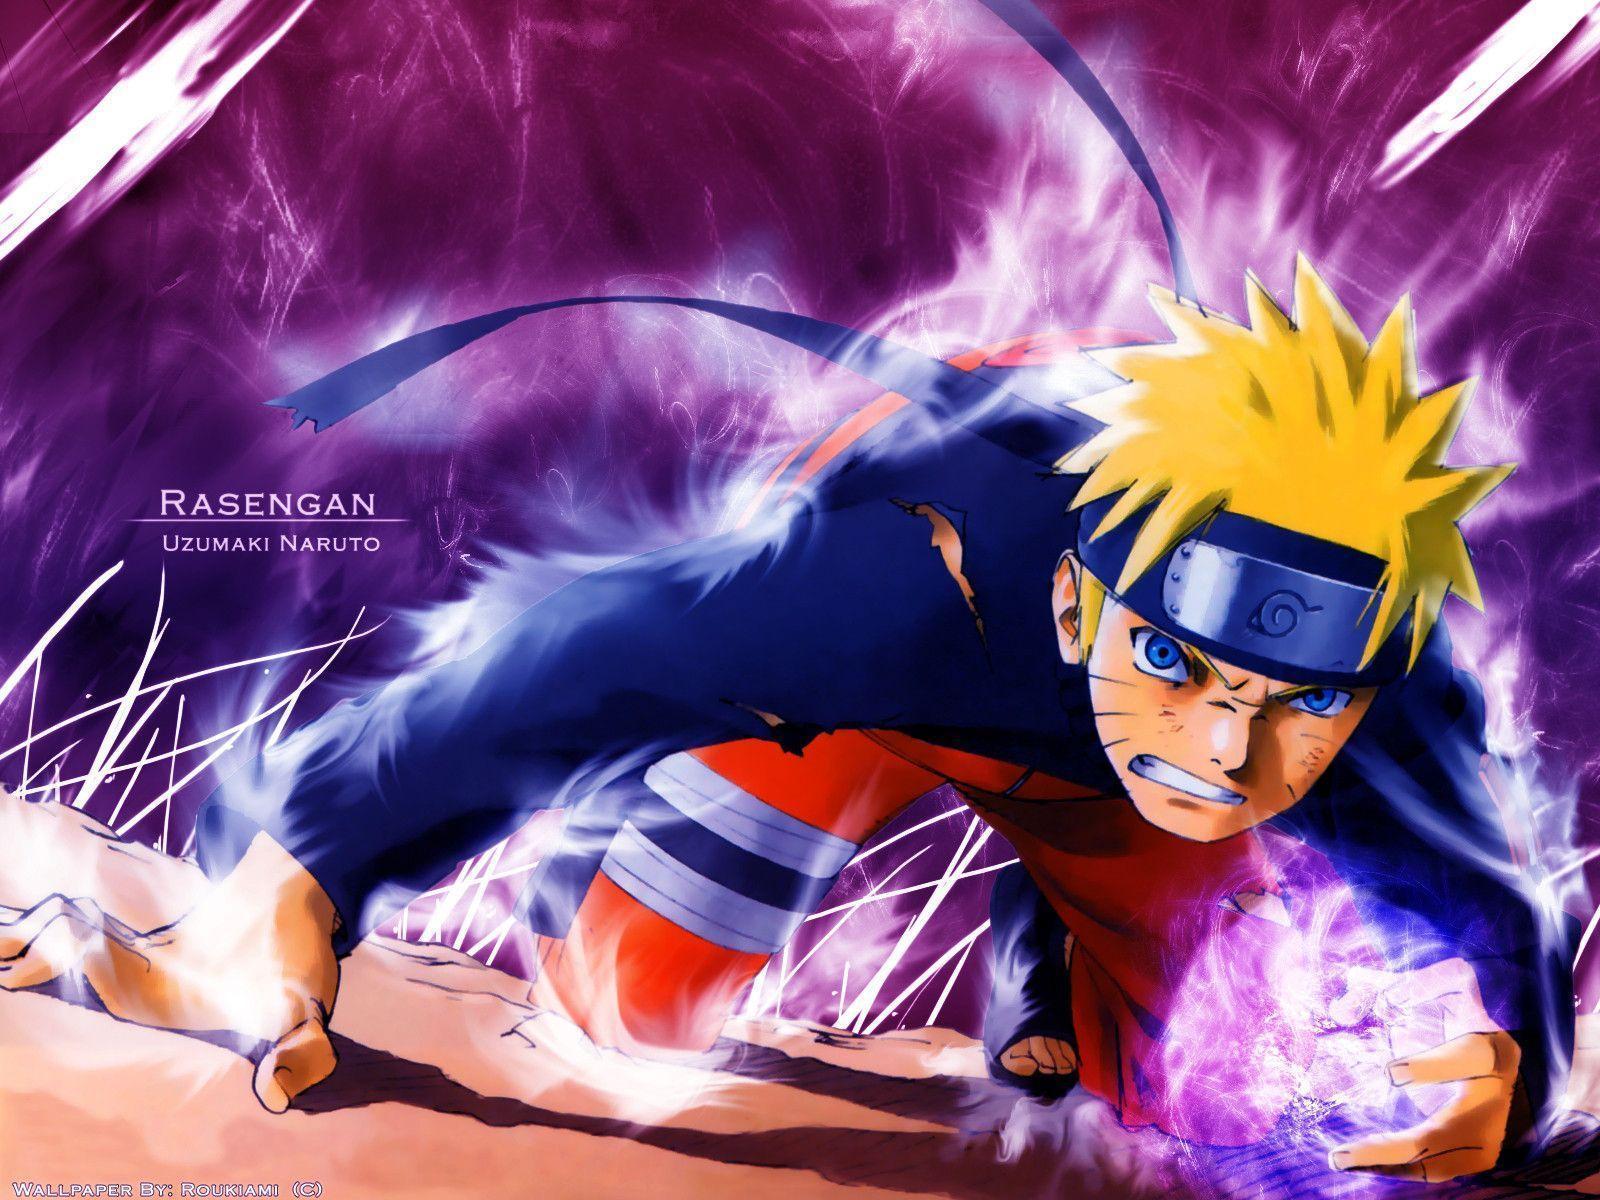 Naruto Uzumaki Rasengan Wallpaper. HD Wallpaper, background